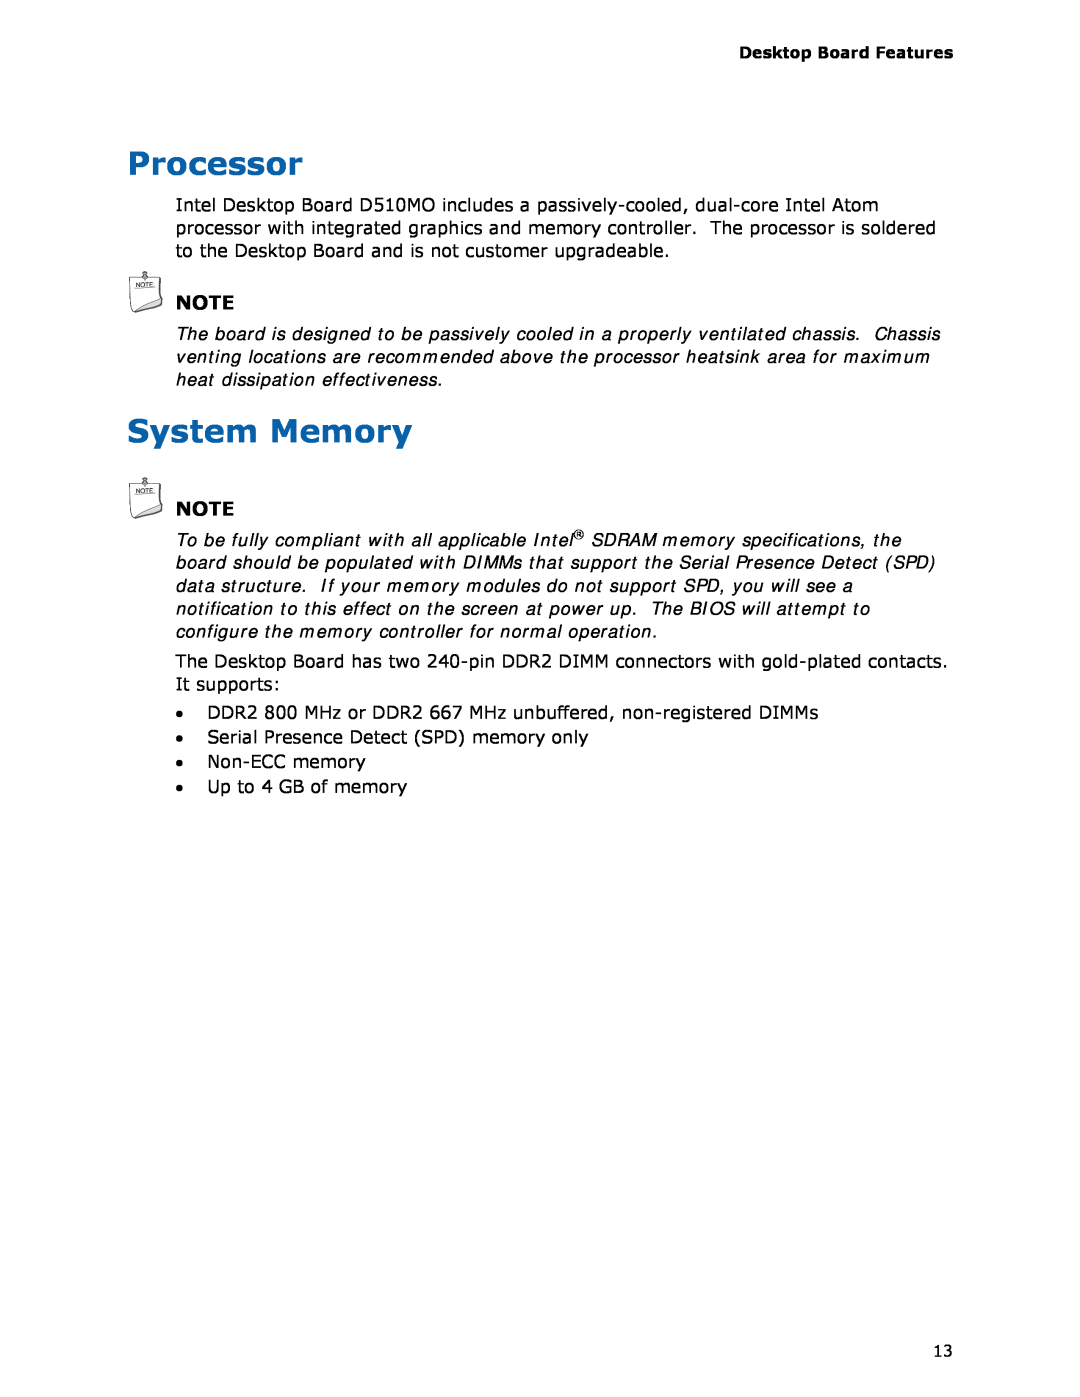 Intel D510MO manual Processor, System Memory 